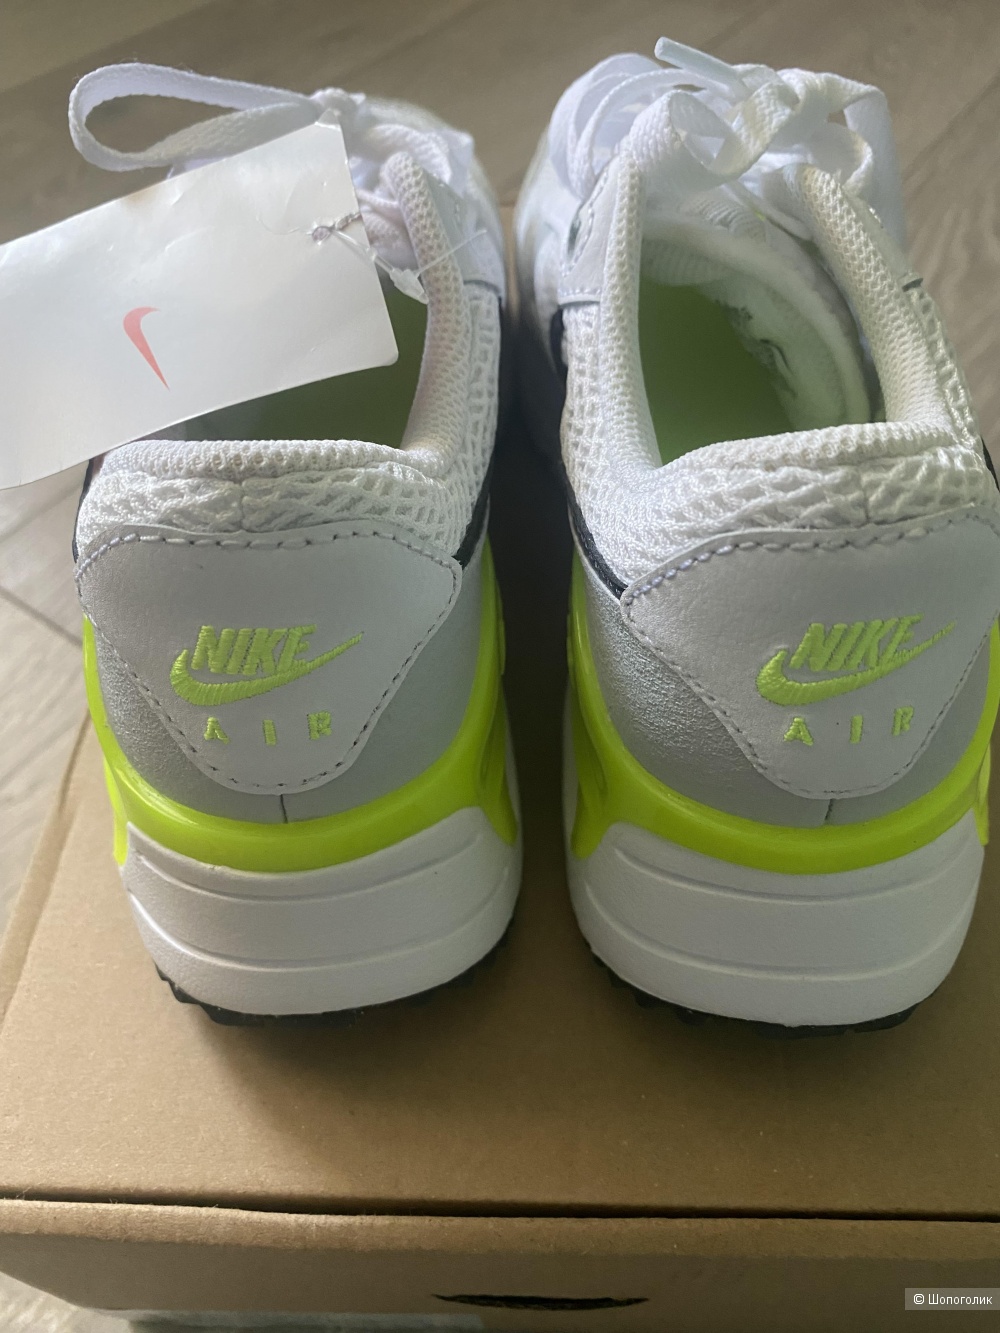 Кроссовки Nike air max systm размер 36,5